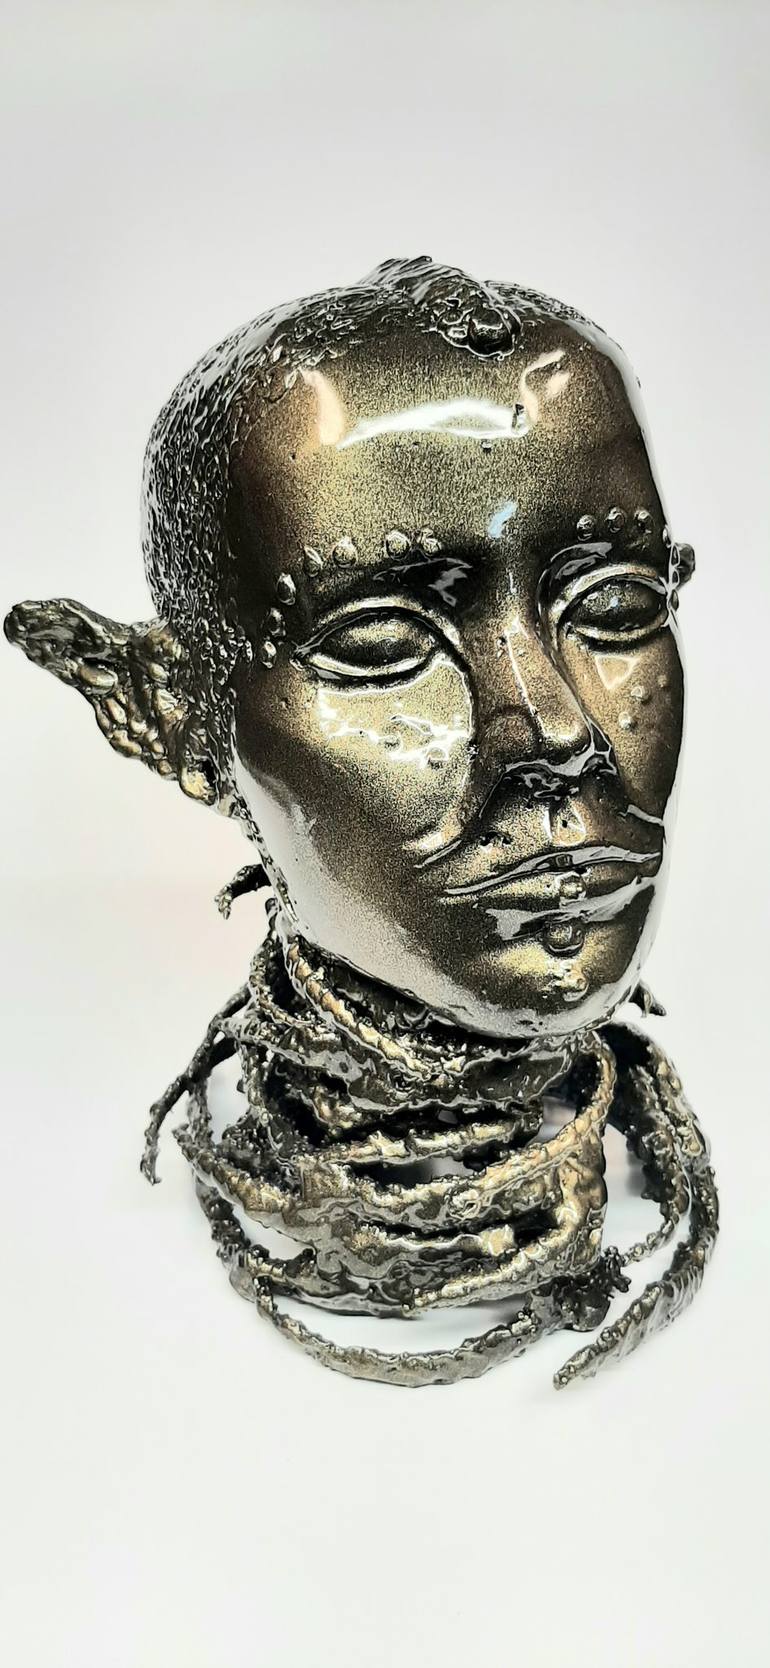 Original Portraiture Fantasy Sculpture by Darius von Fluder